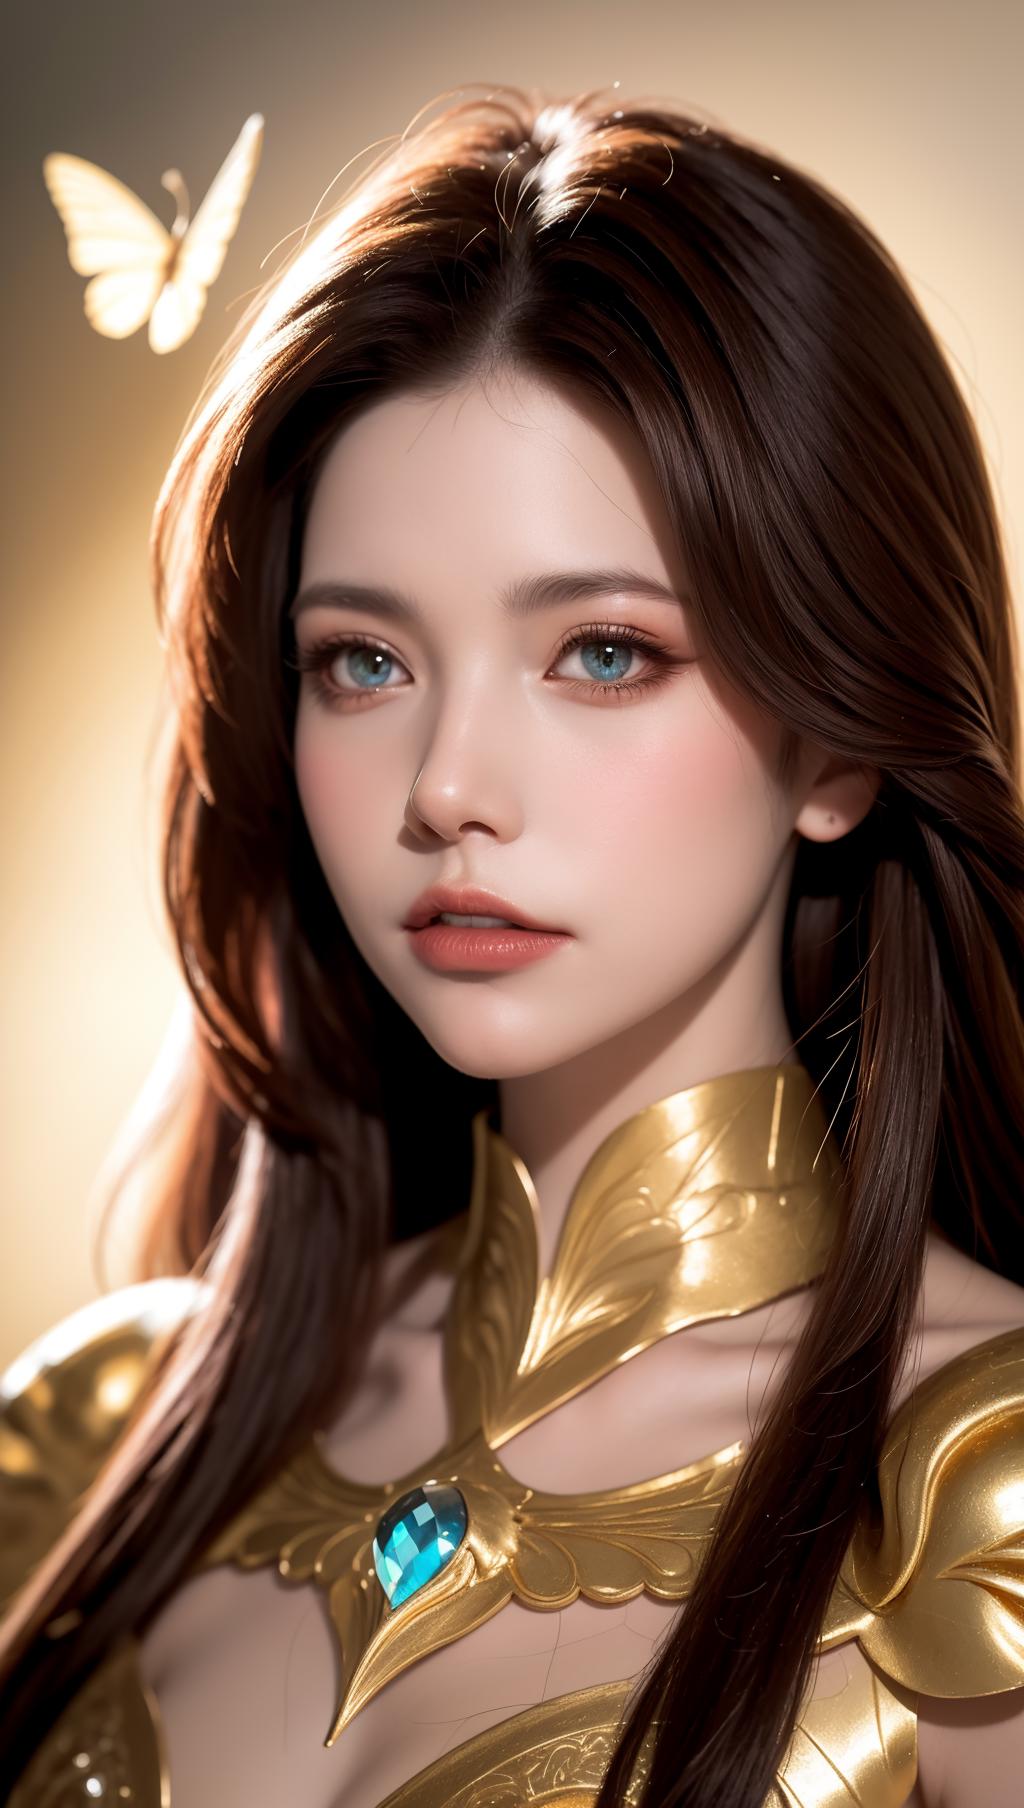 AI model image by chuong1224